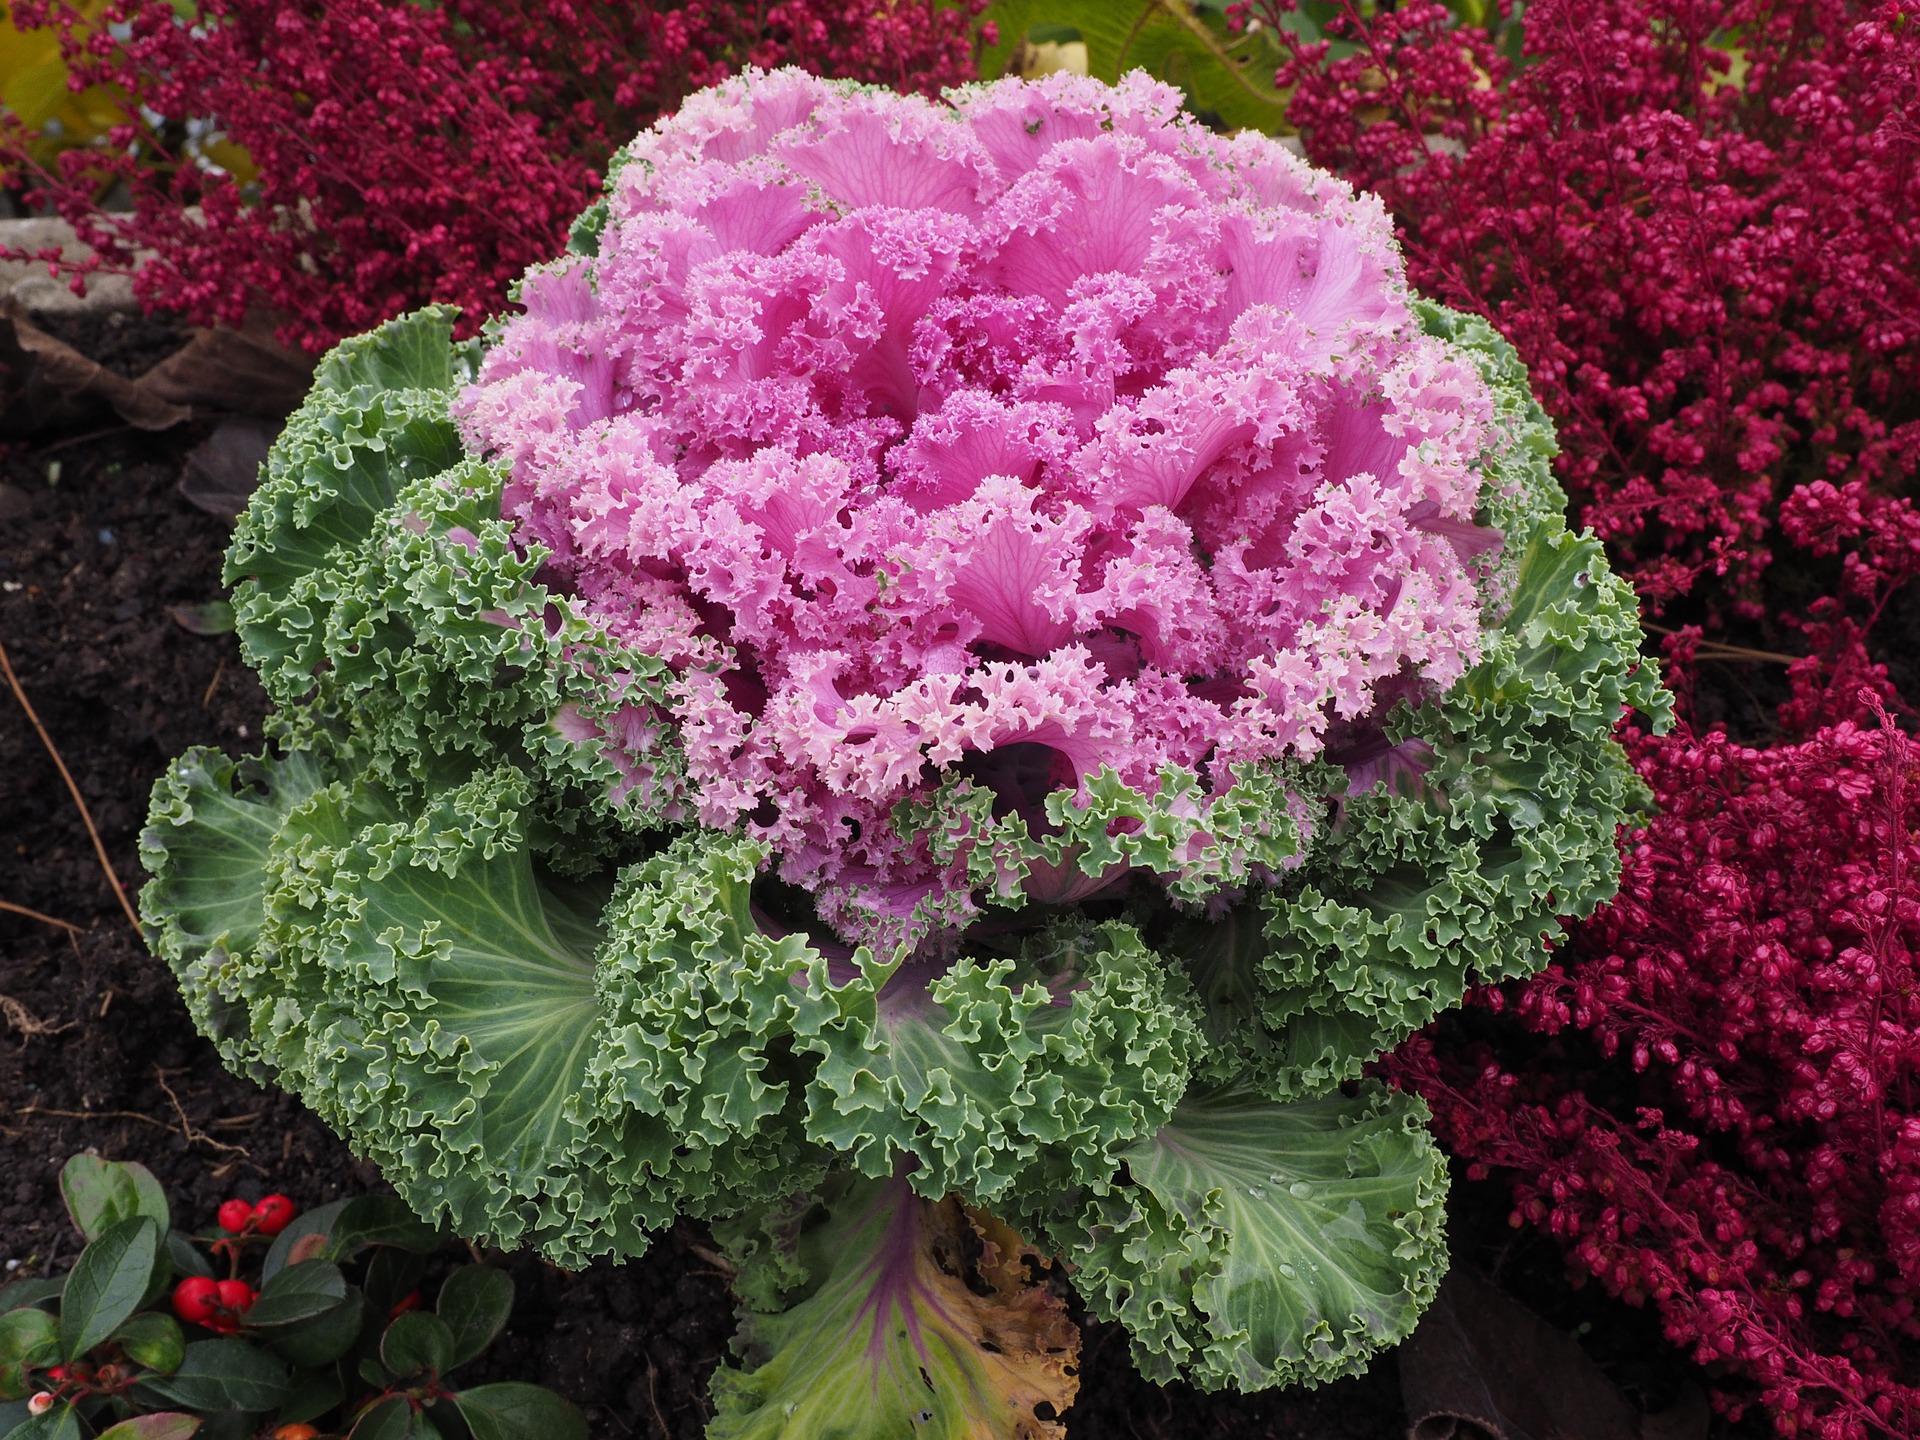 Ornamental millennial pink cabbage